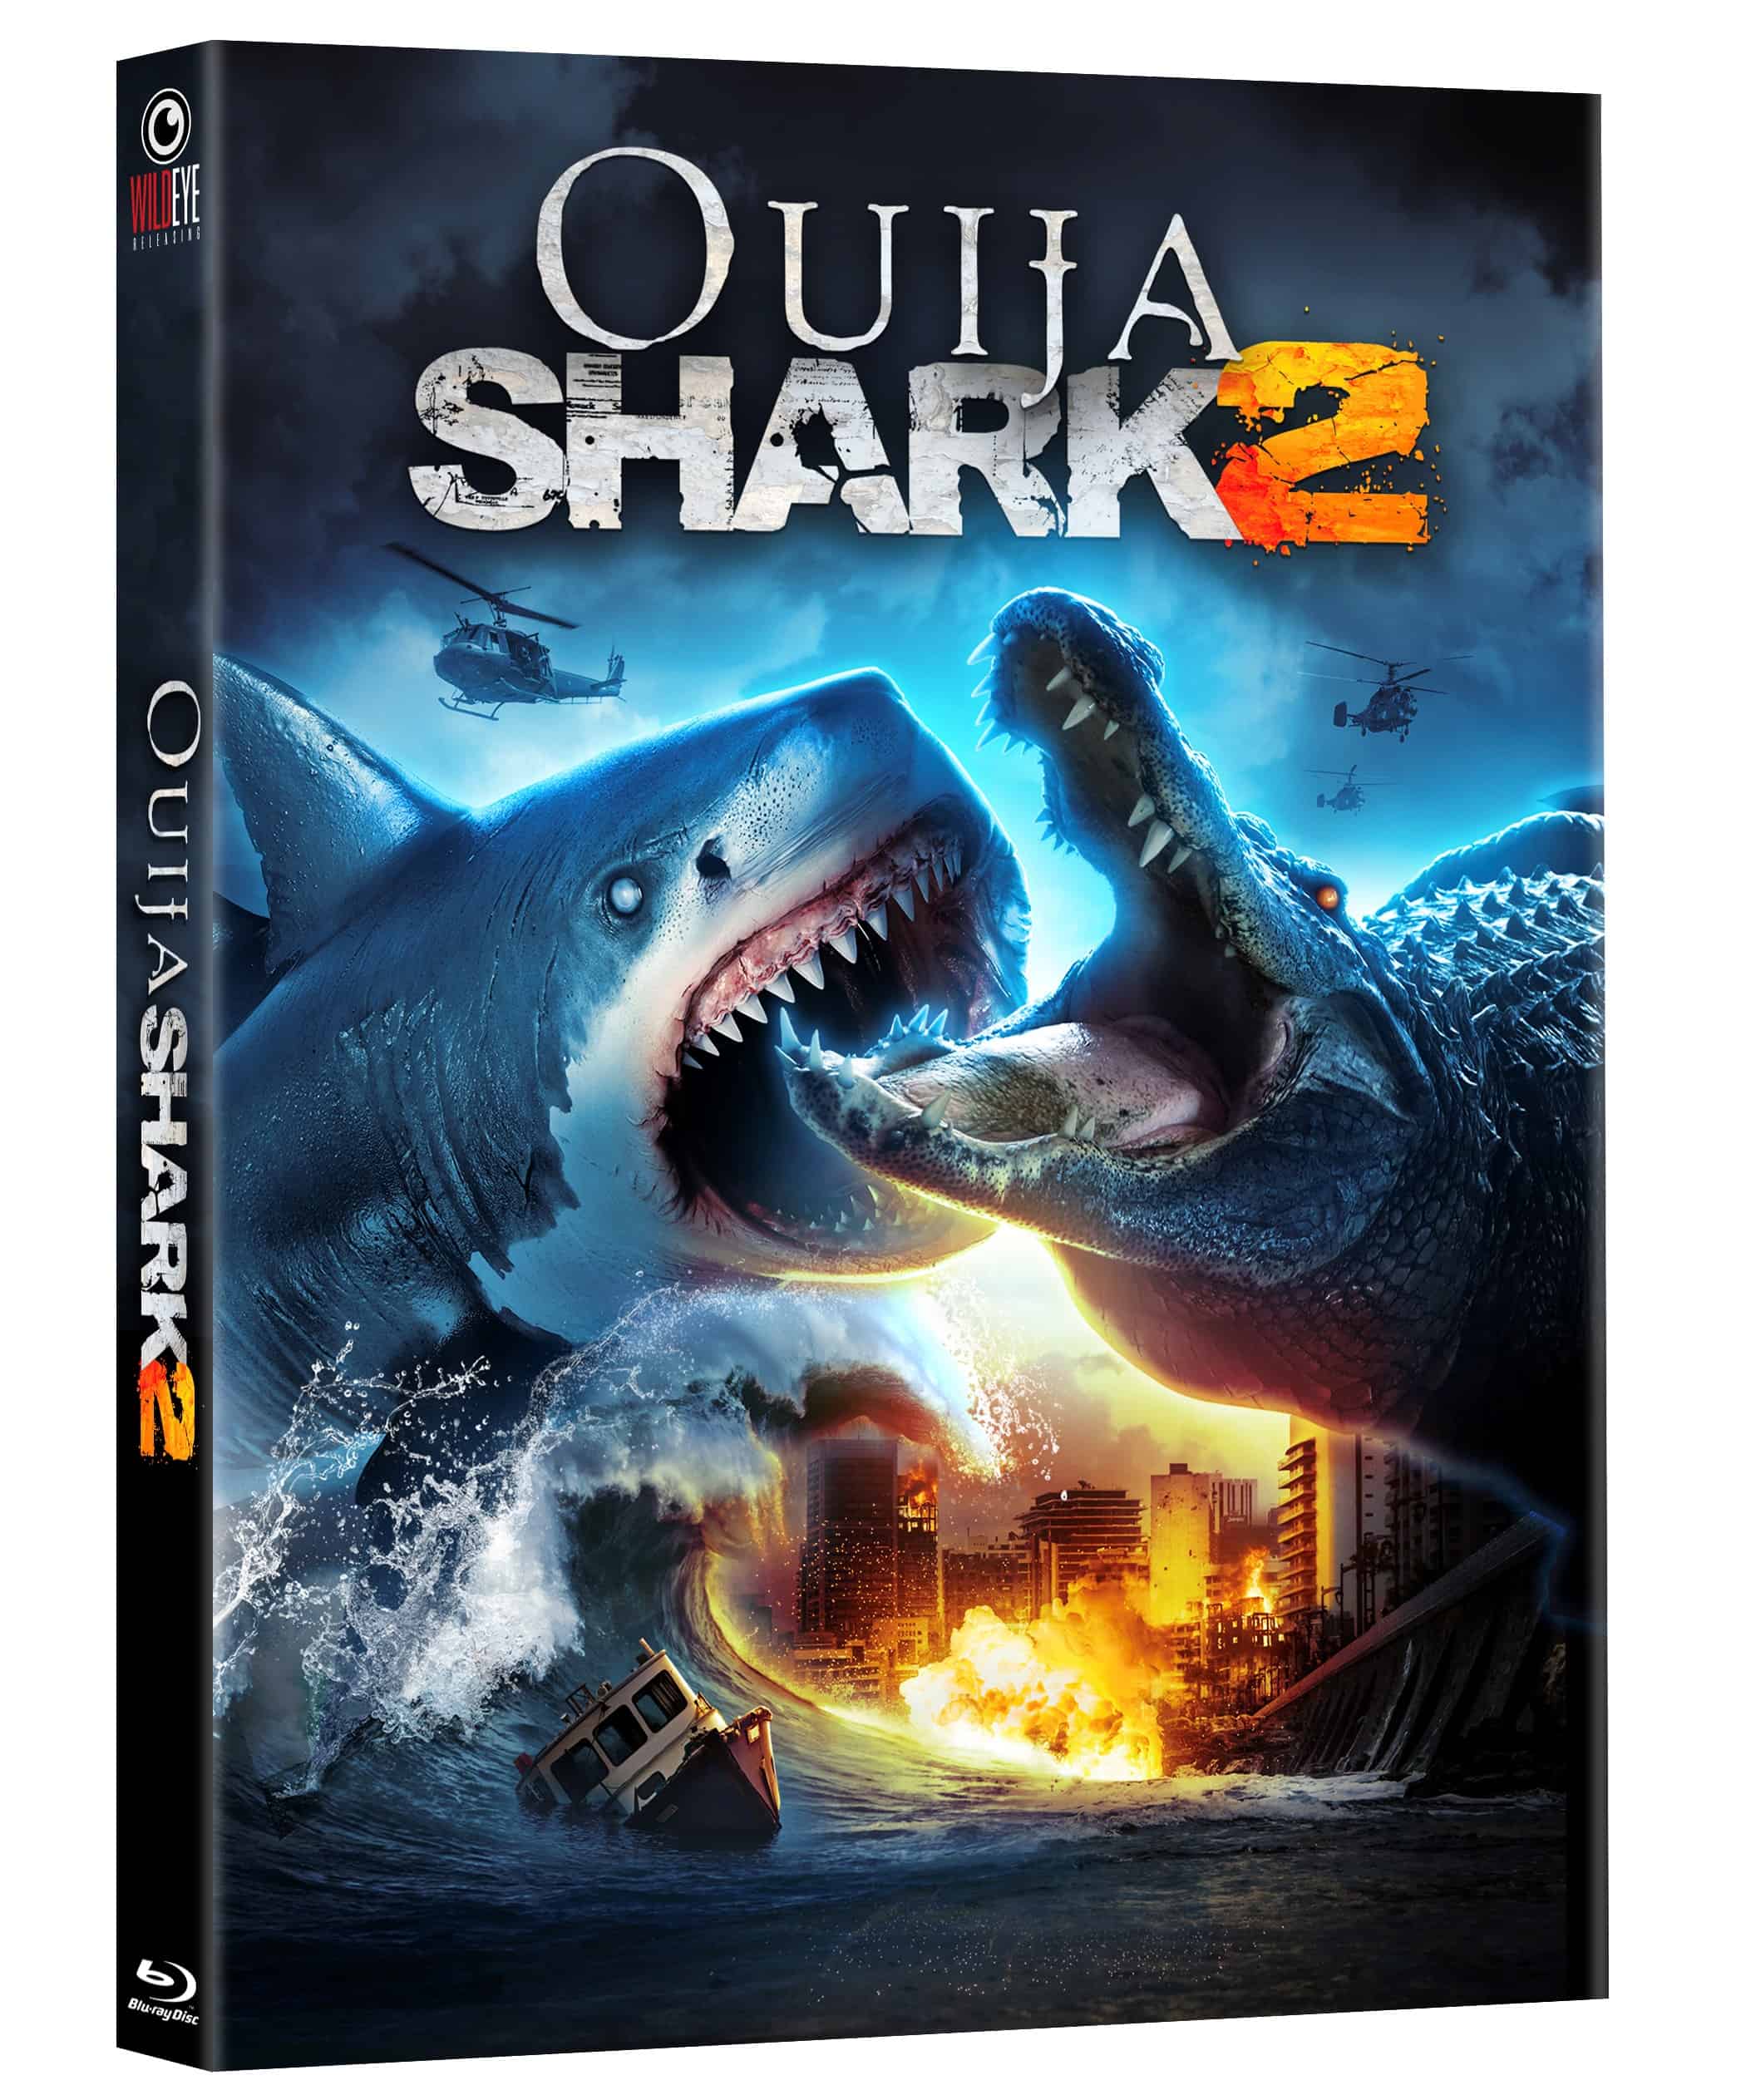 Wild Eye Releasing Announces Digital and Blu-Ray Release of Director John Migliore's OUIJA SHARK 2 21